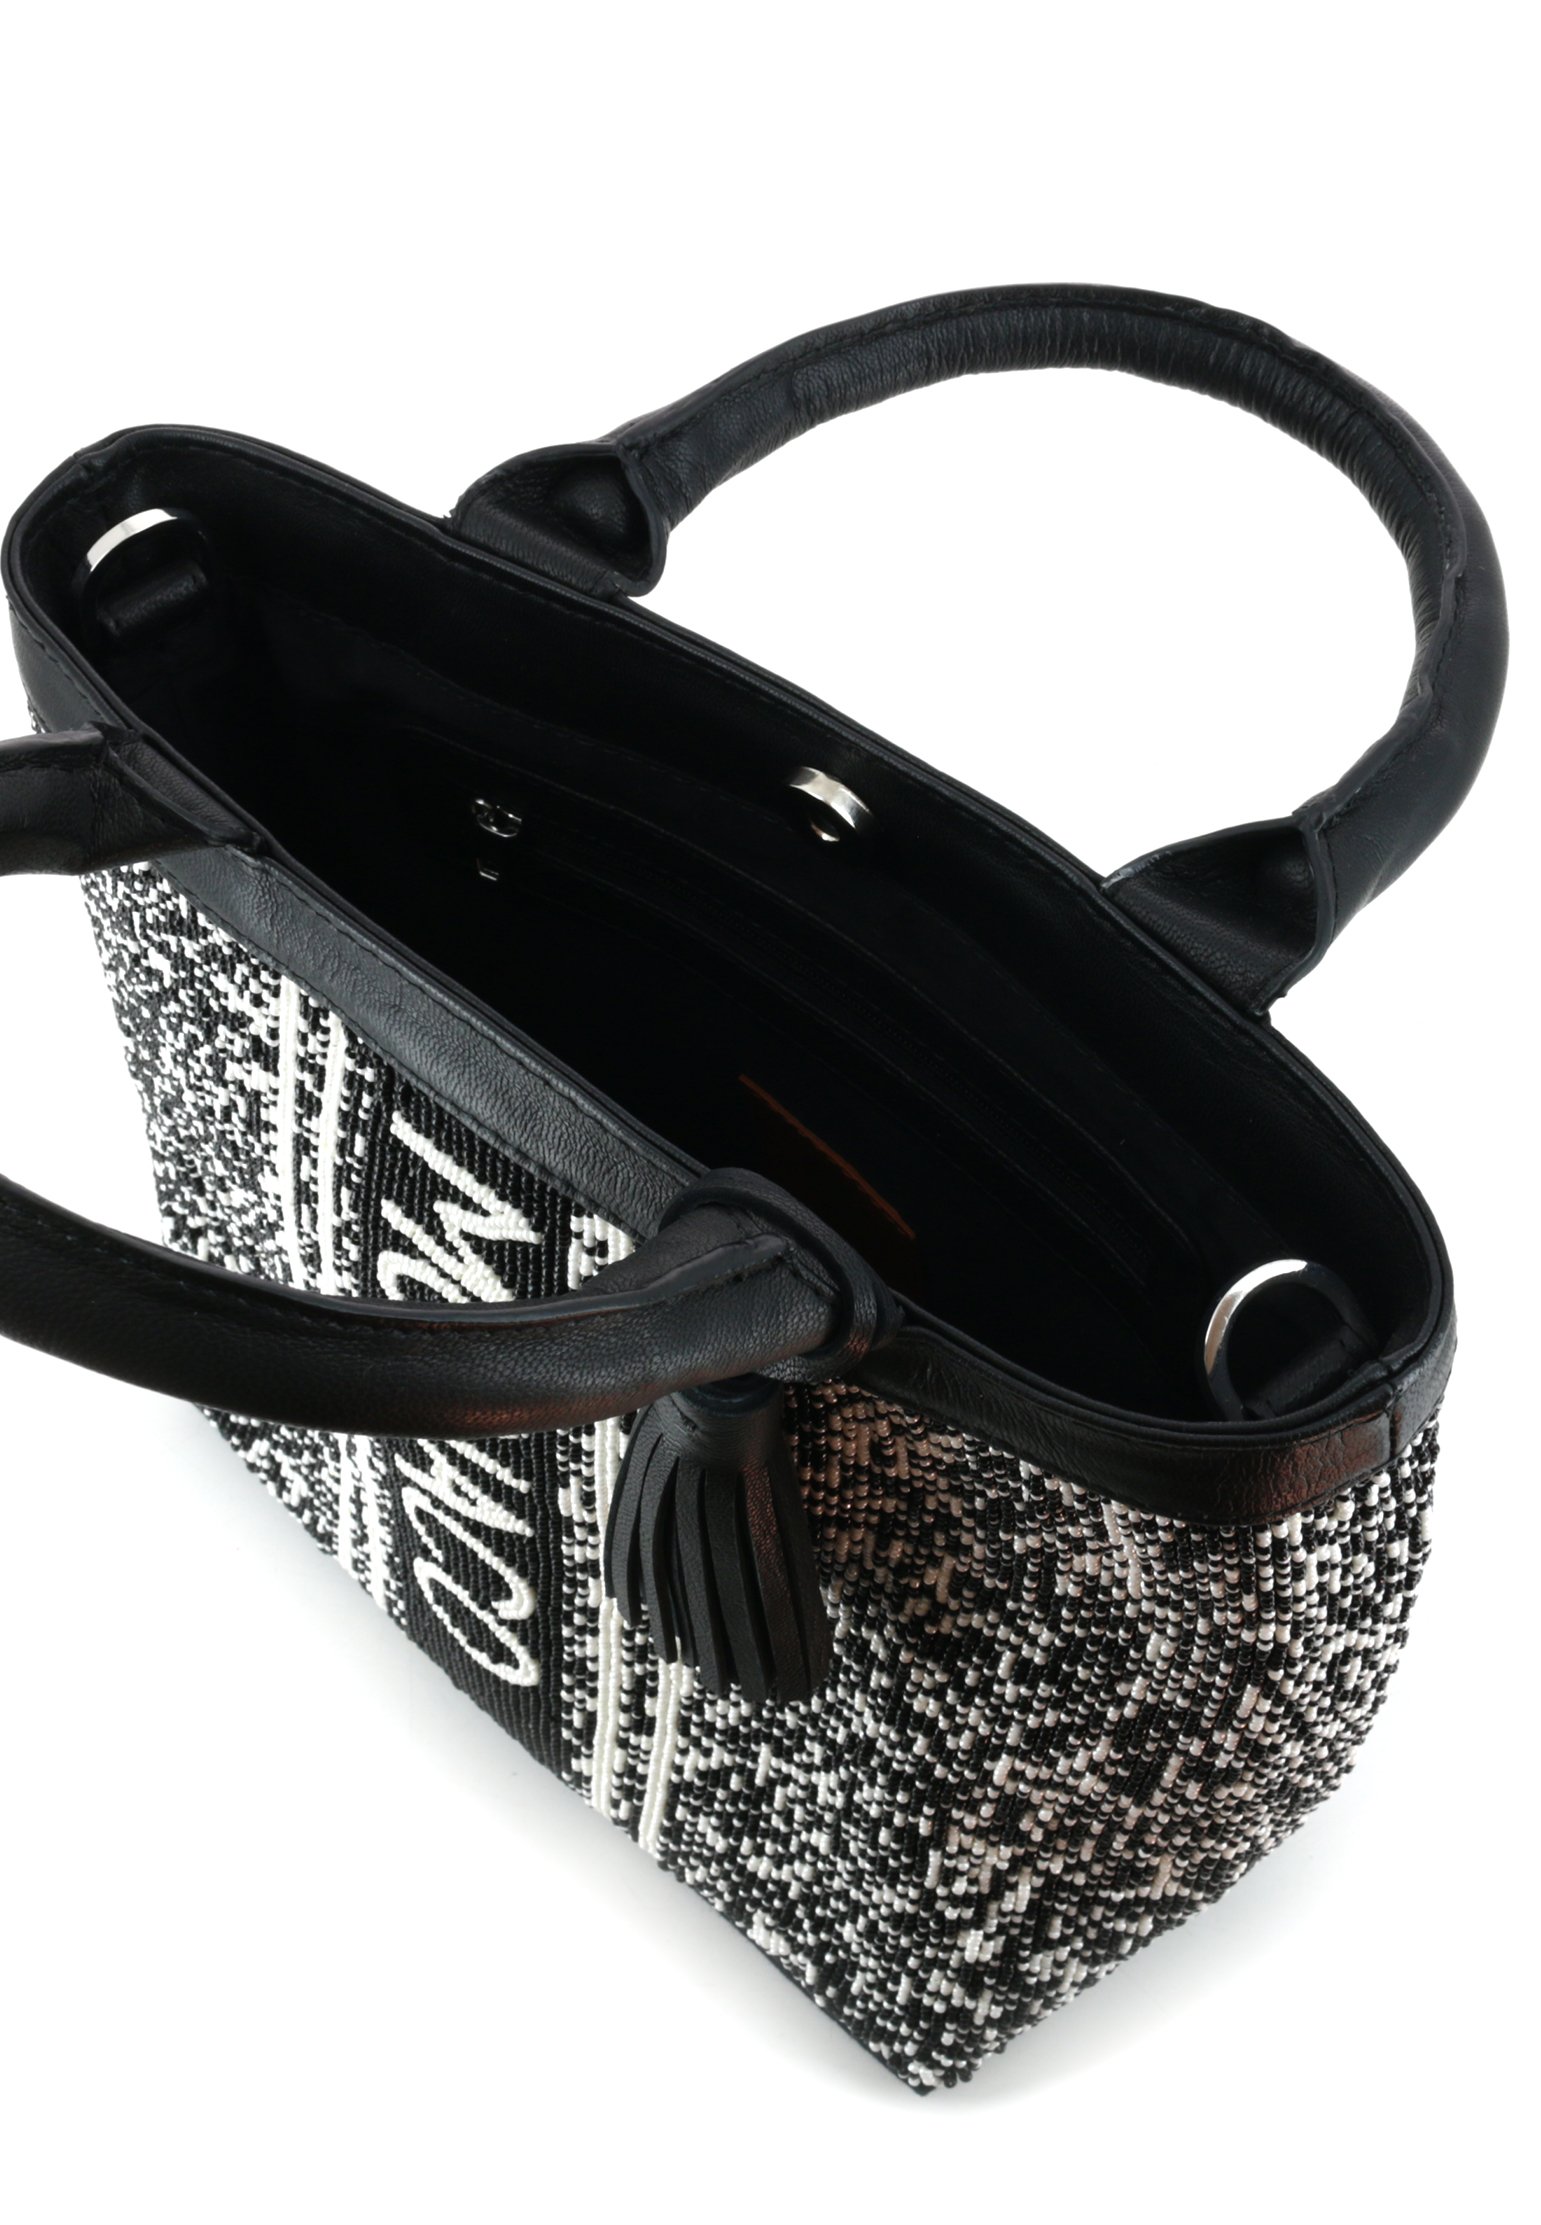 Bag DE SIENA Color: black (Code: 2320) in online store Allure